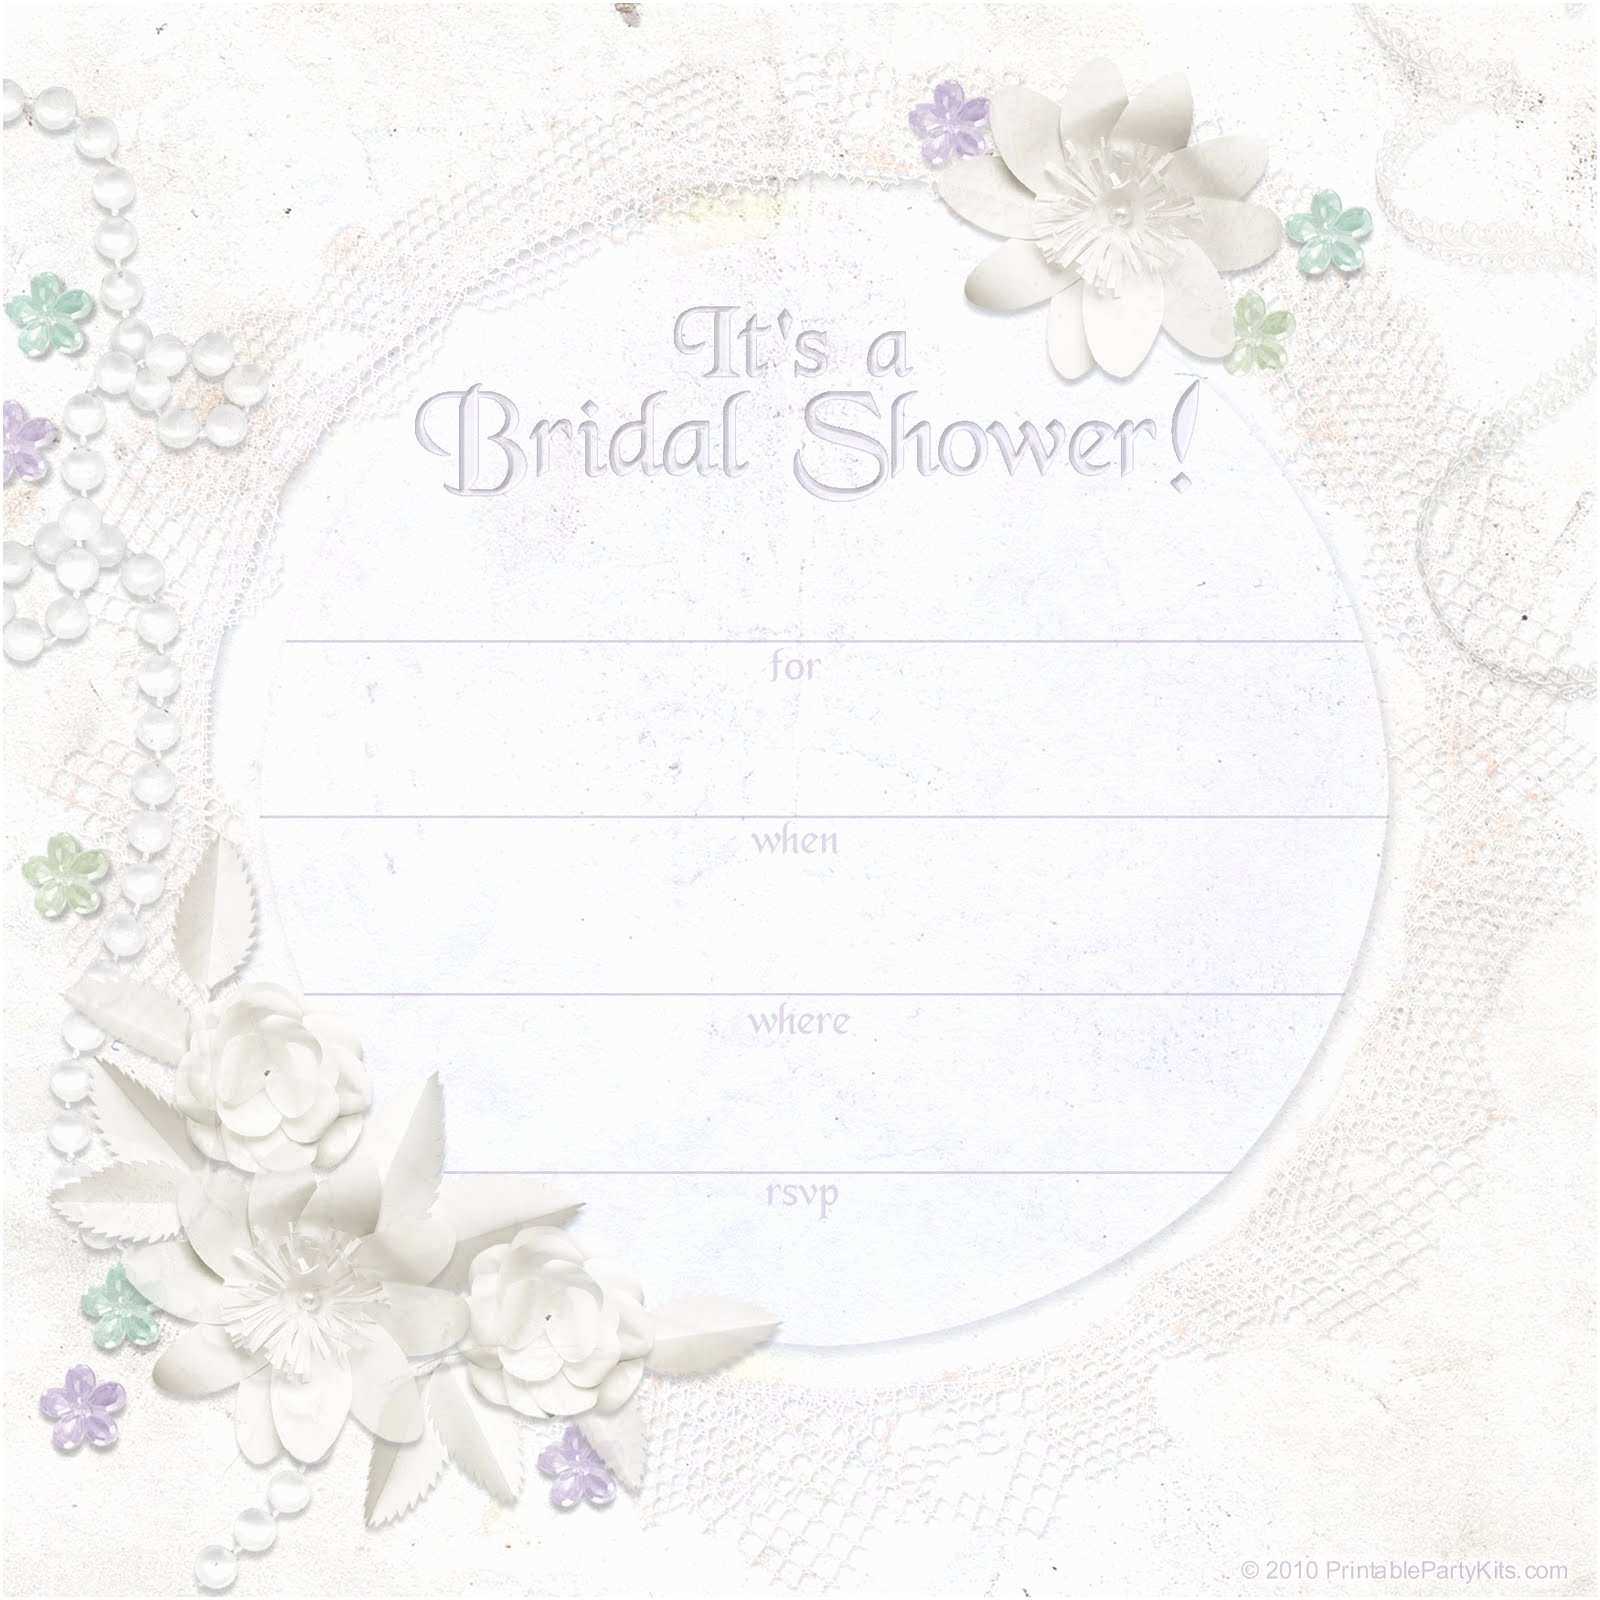 Free Wedding Shower Invitation Templates Bridal Shower Within Blank Bridal Shower Invitations Templates